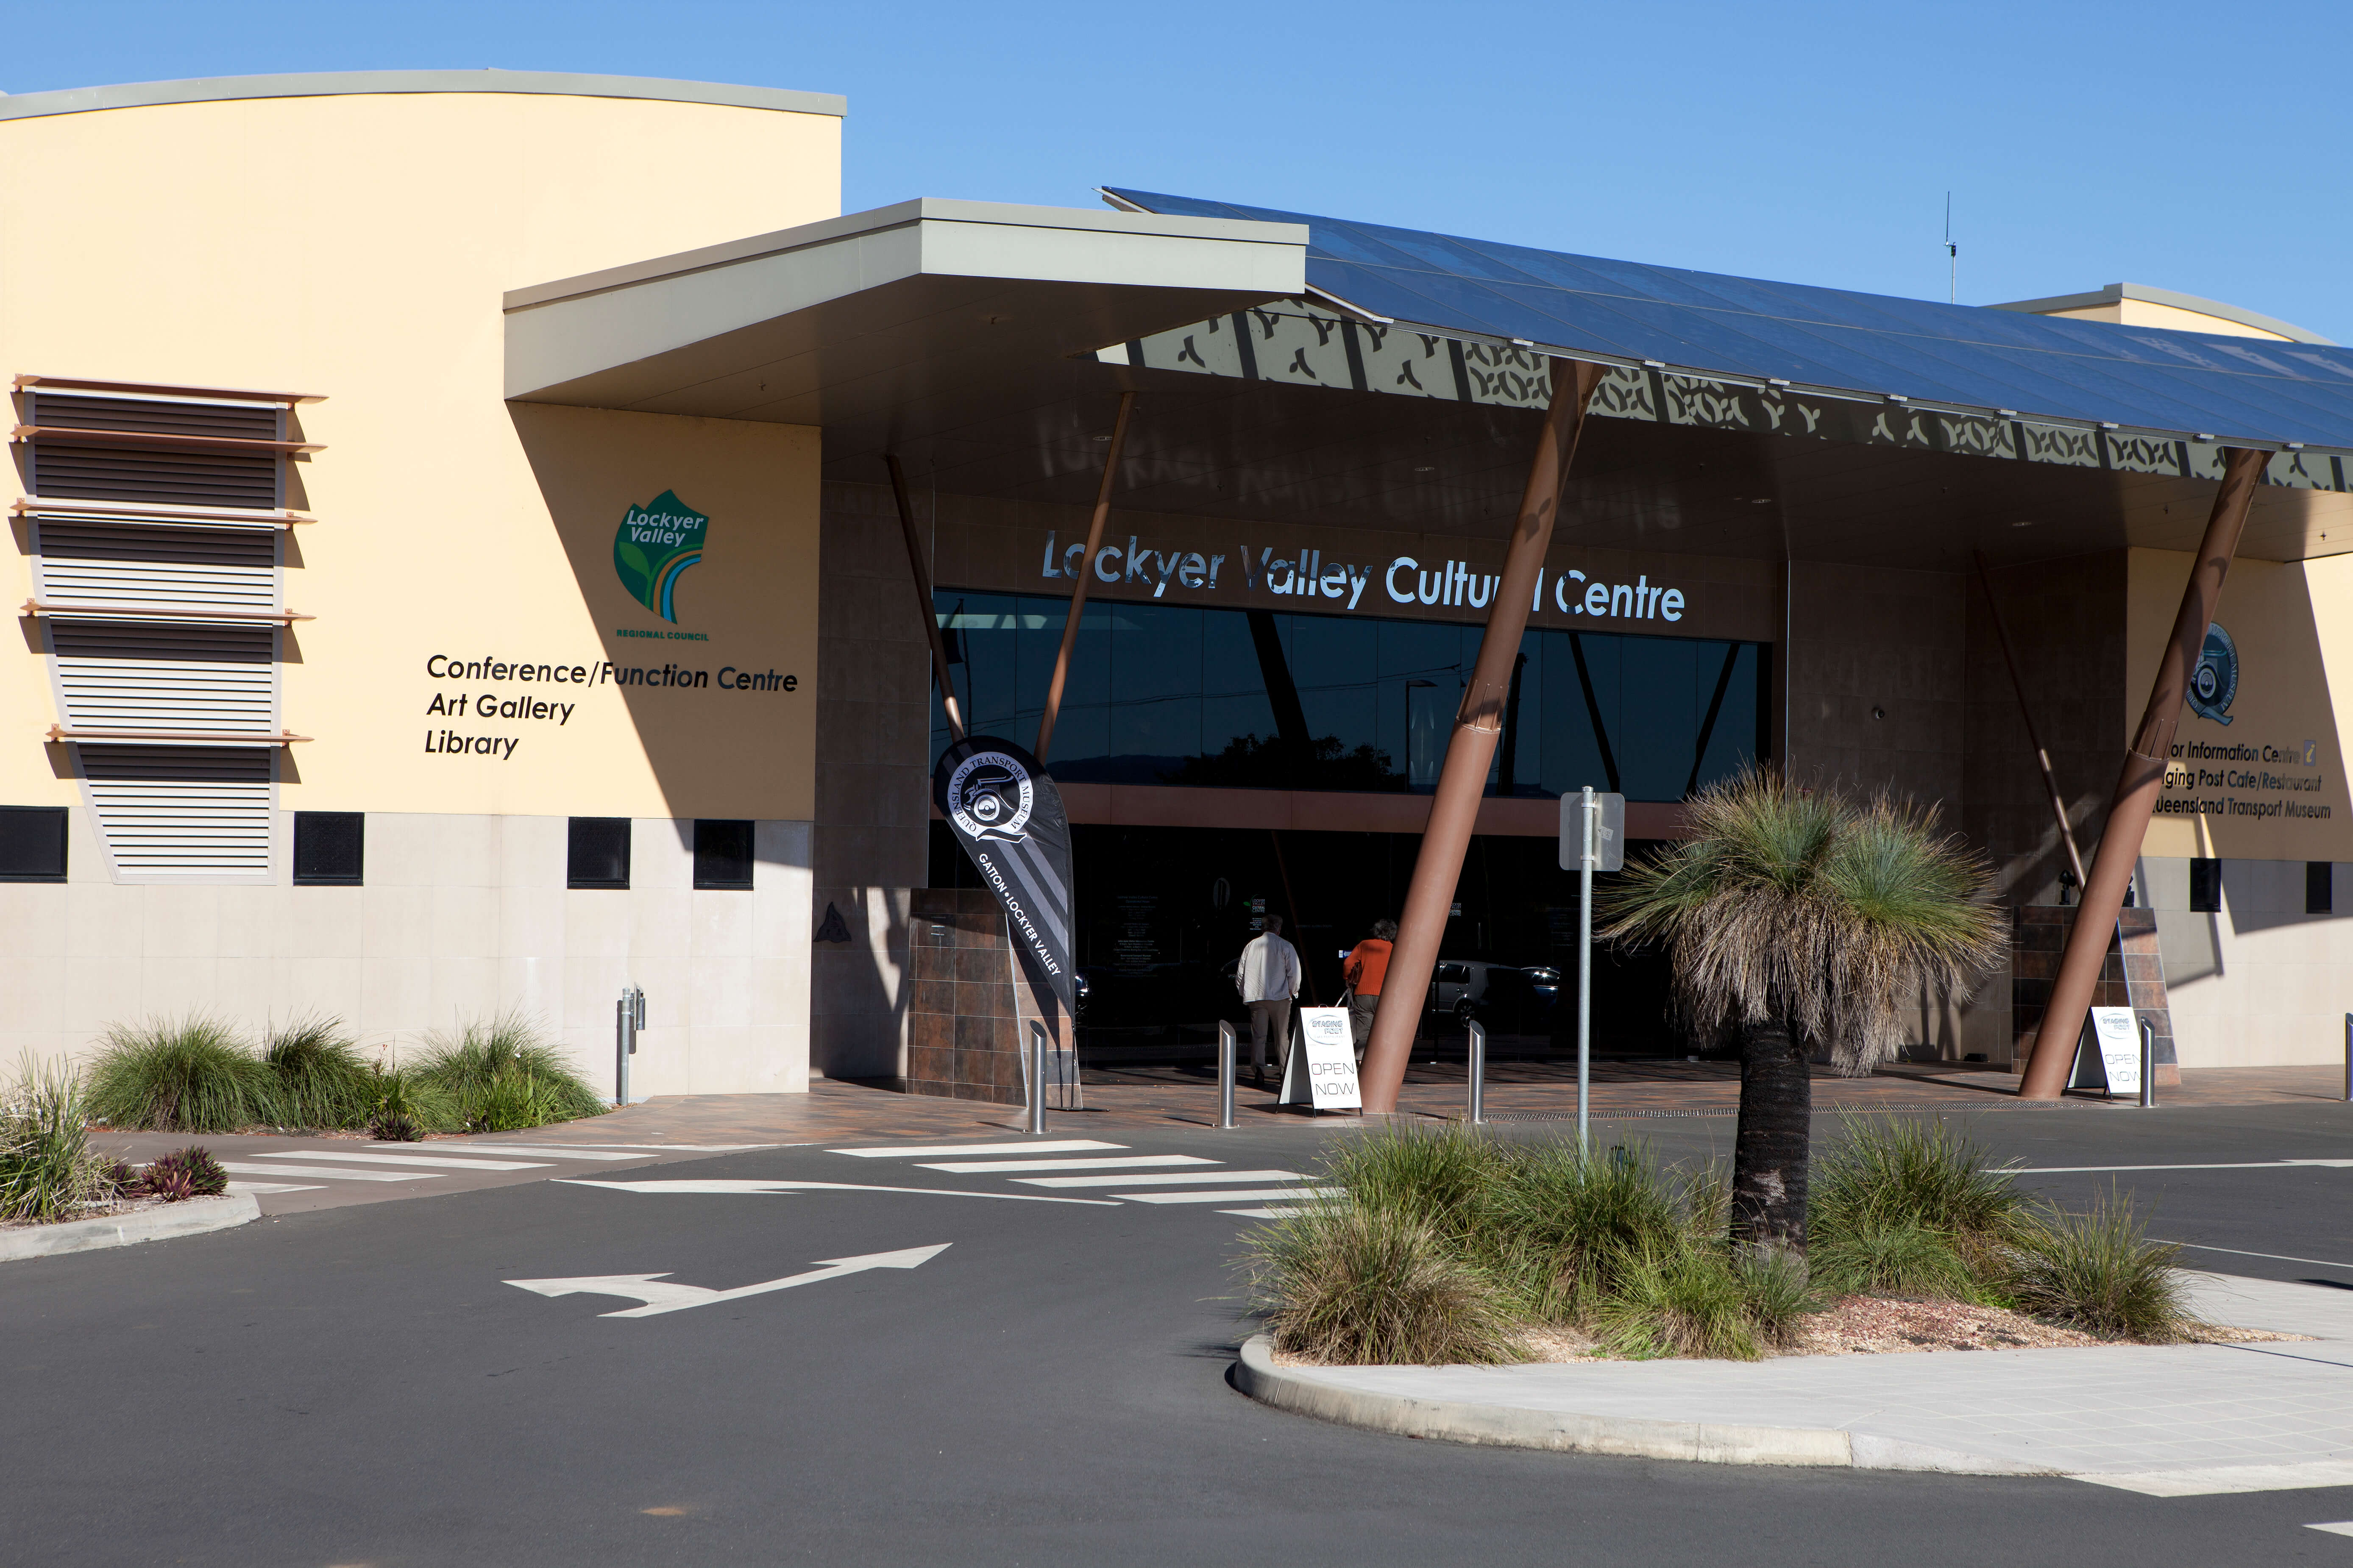 Lockyer Valley Cultural Centre